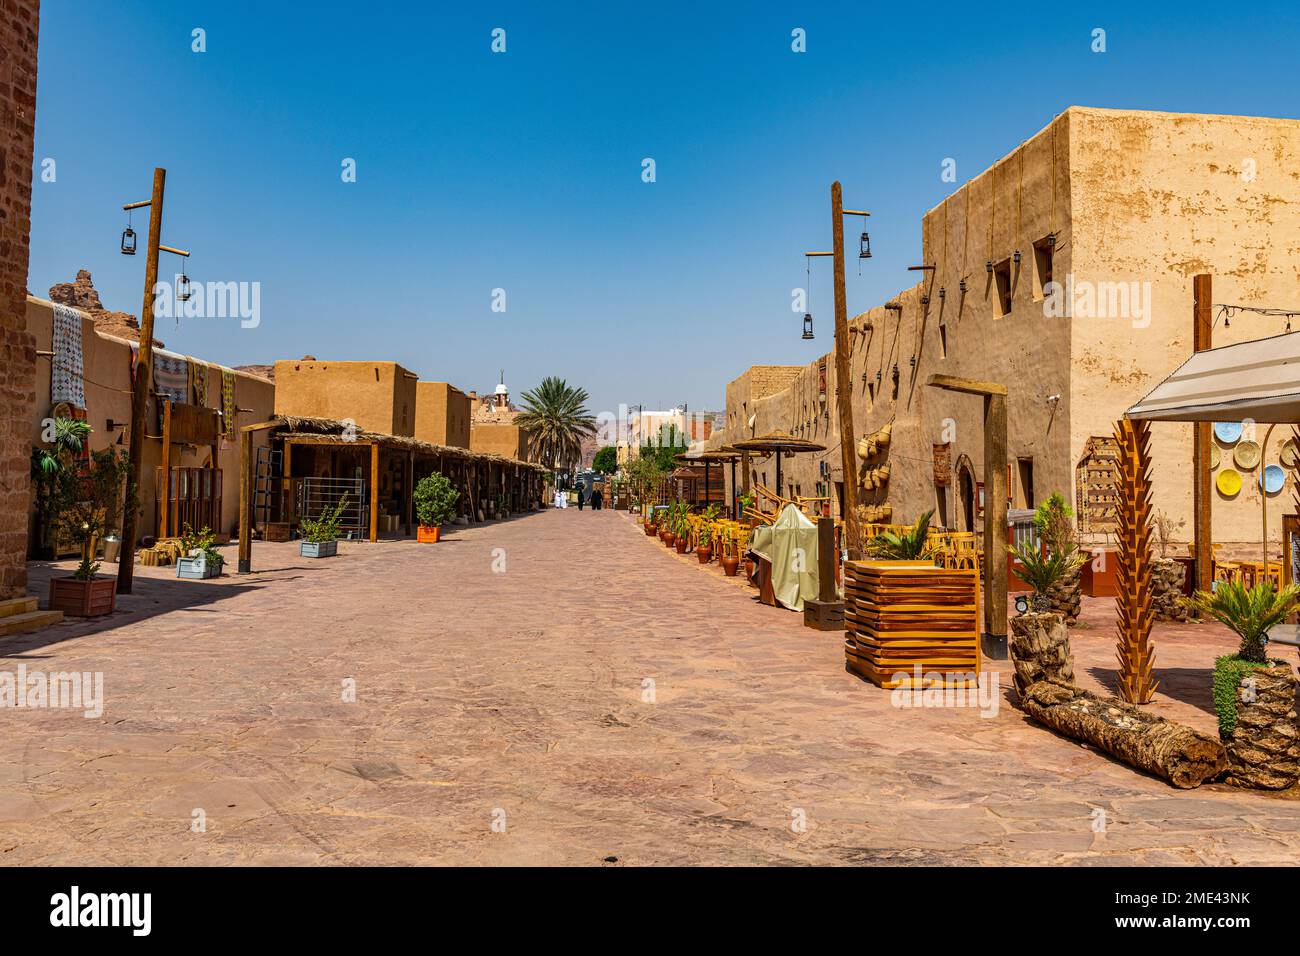 Saudi Arabia, Al-Ula, Empty street in desert old town Stock Photo